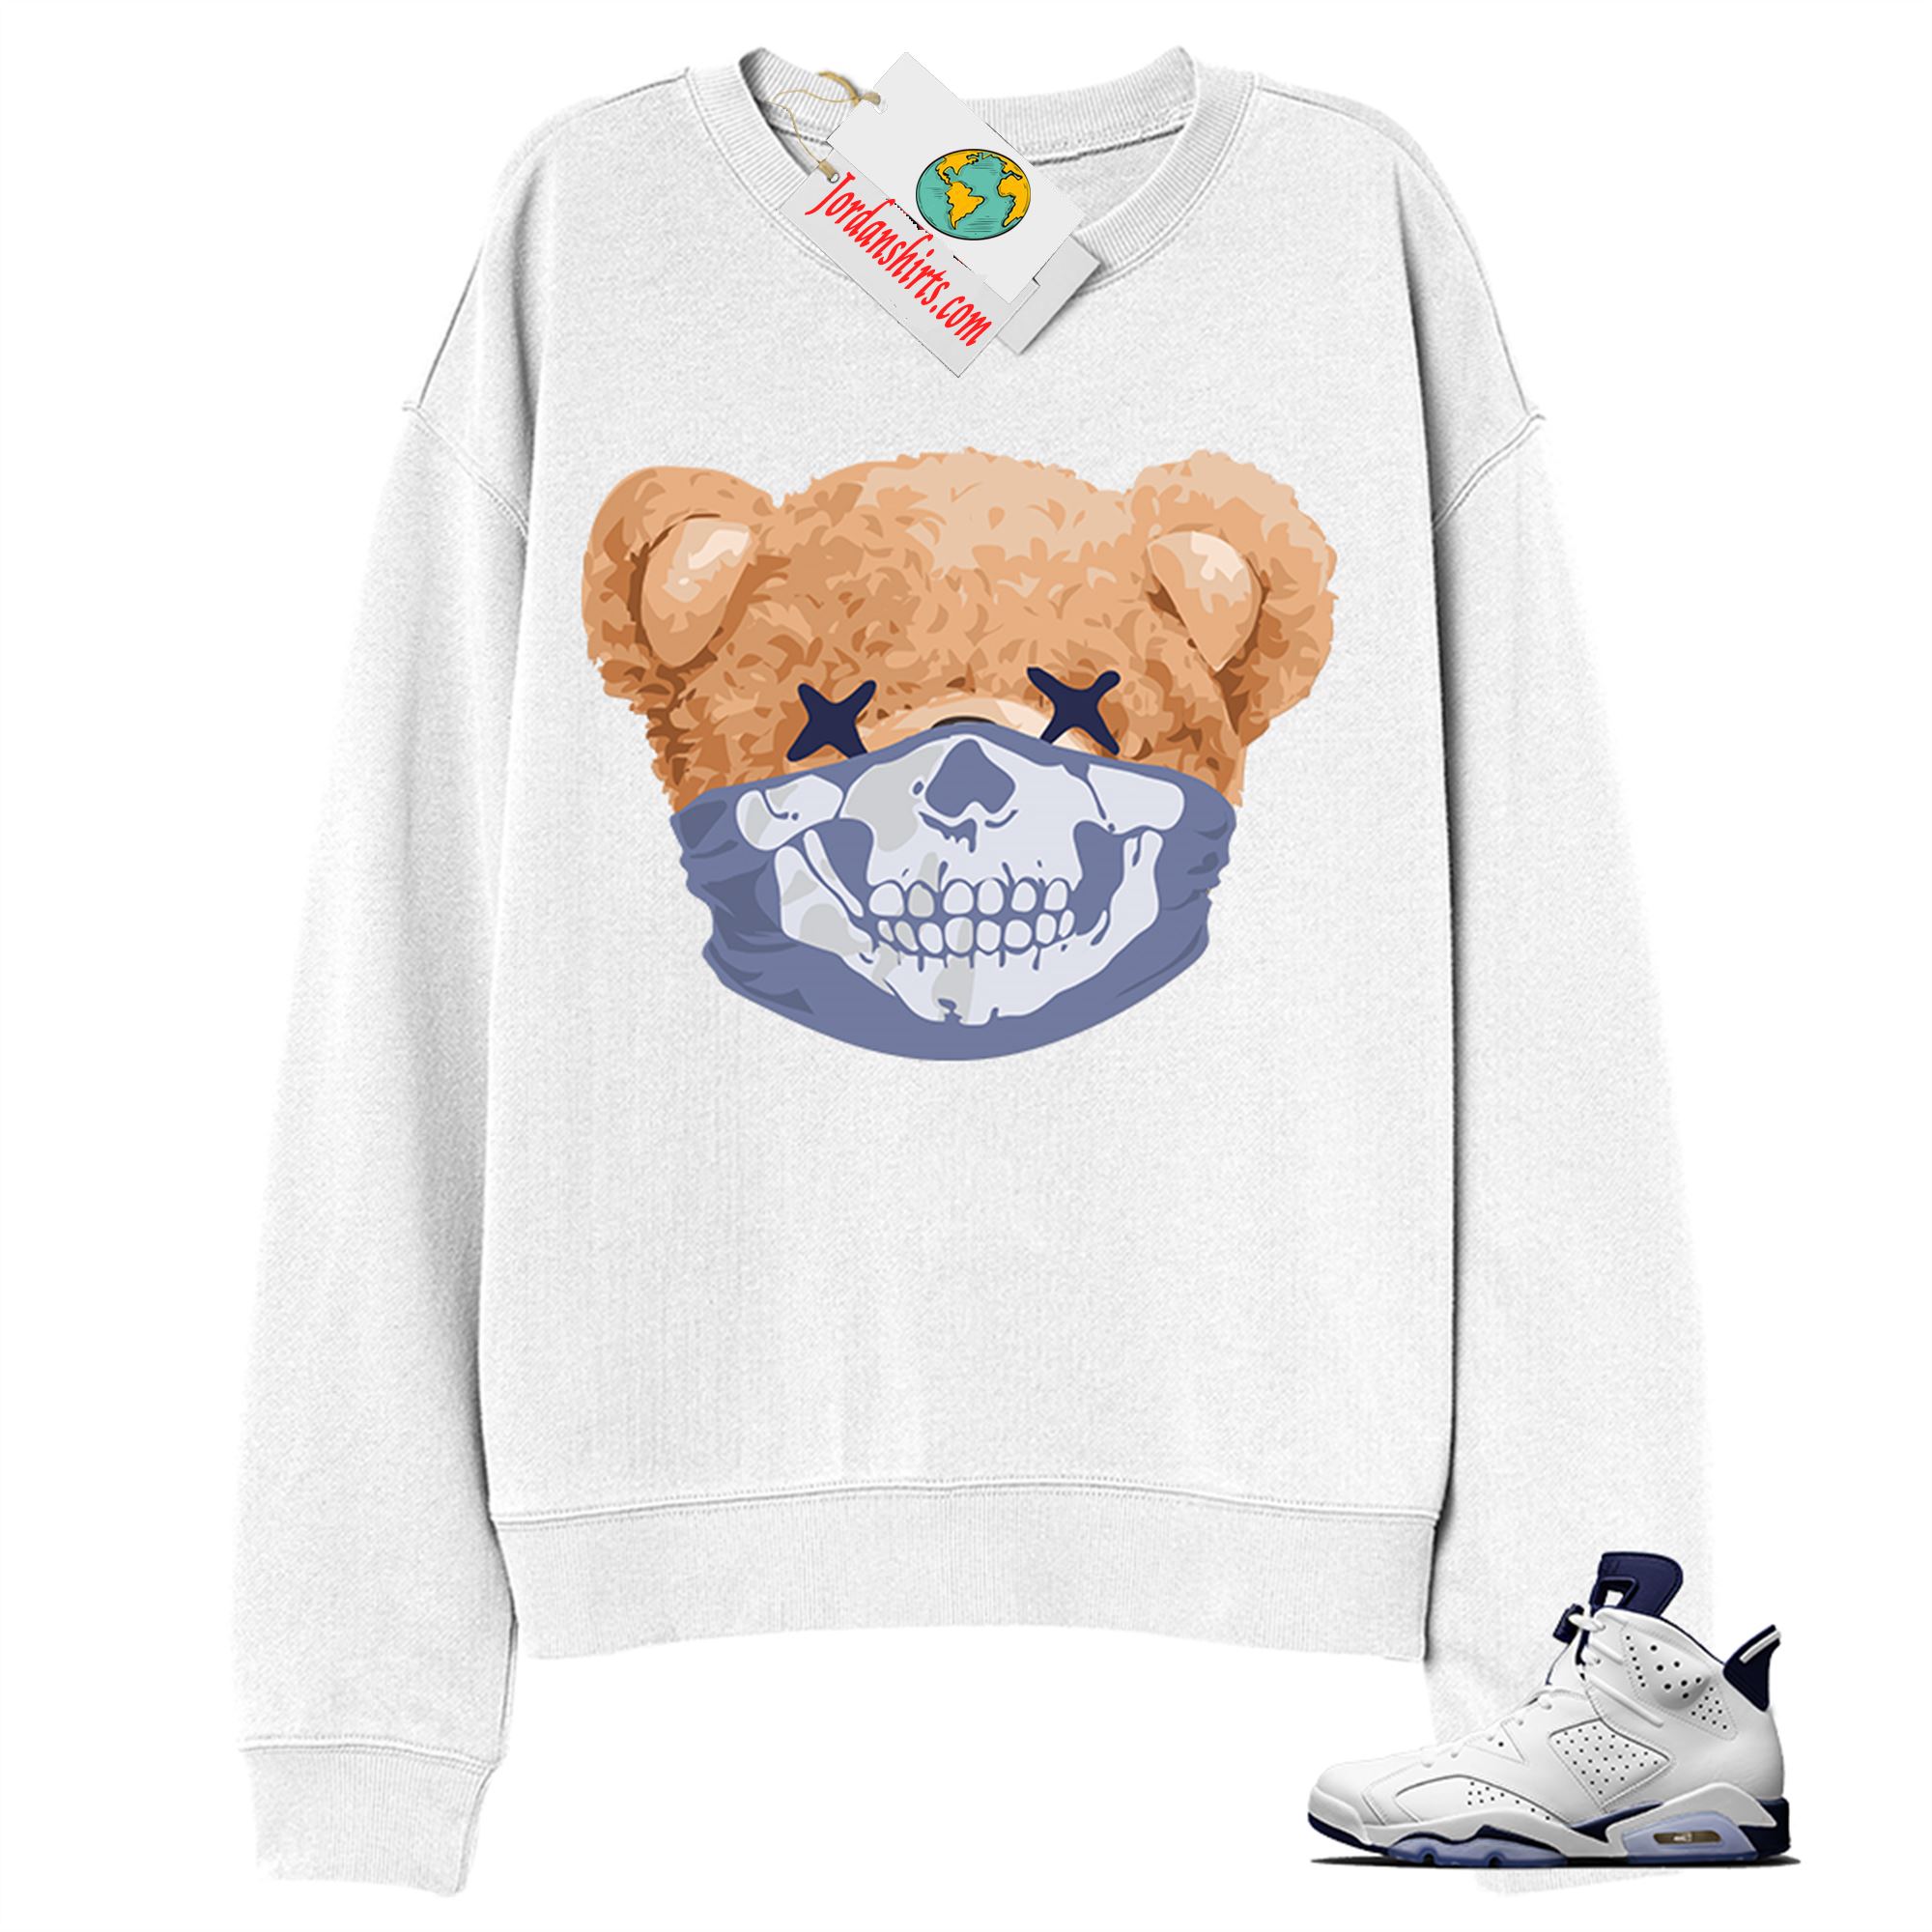 Jordan 6 Sweatshirt, Teddy Bear Skull Bandana White Sweatshirt Air Jordan 6 Midnight Navy 6s Plus Size Up To 5xl